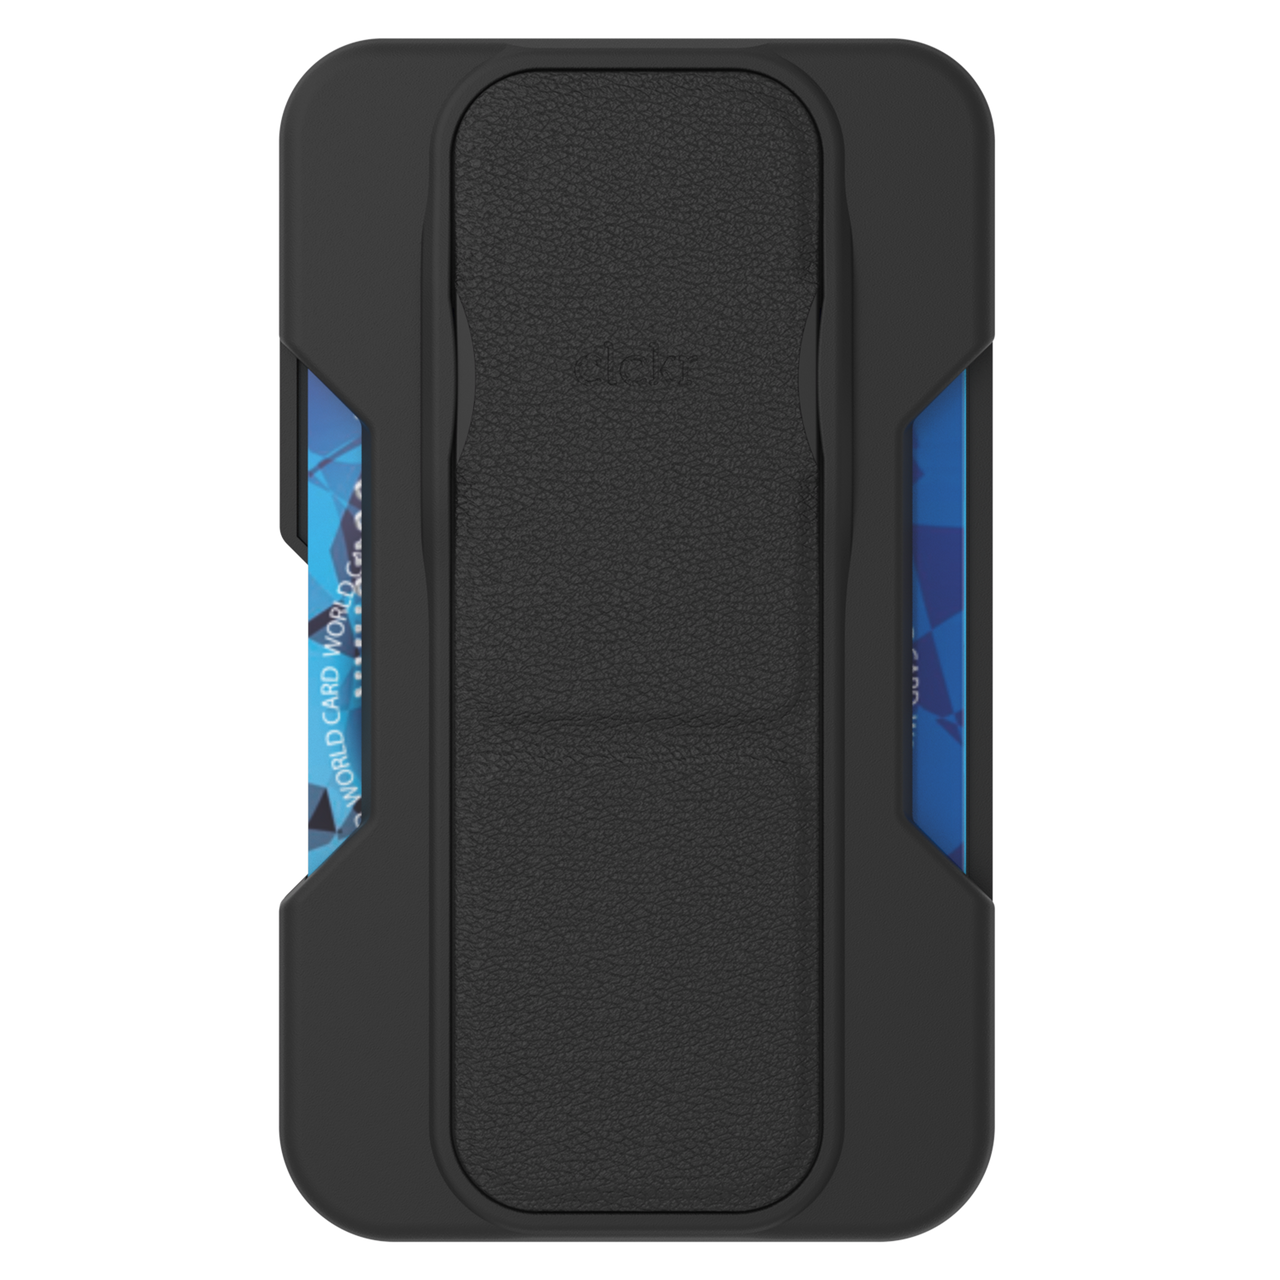 Buy CLCKR iPhone 11 Pro Max Case - Black